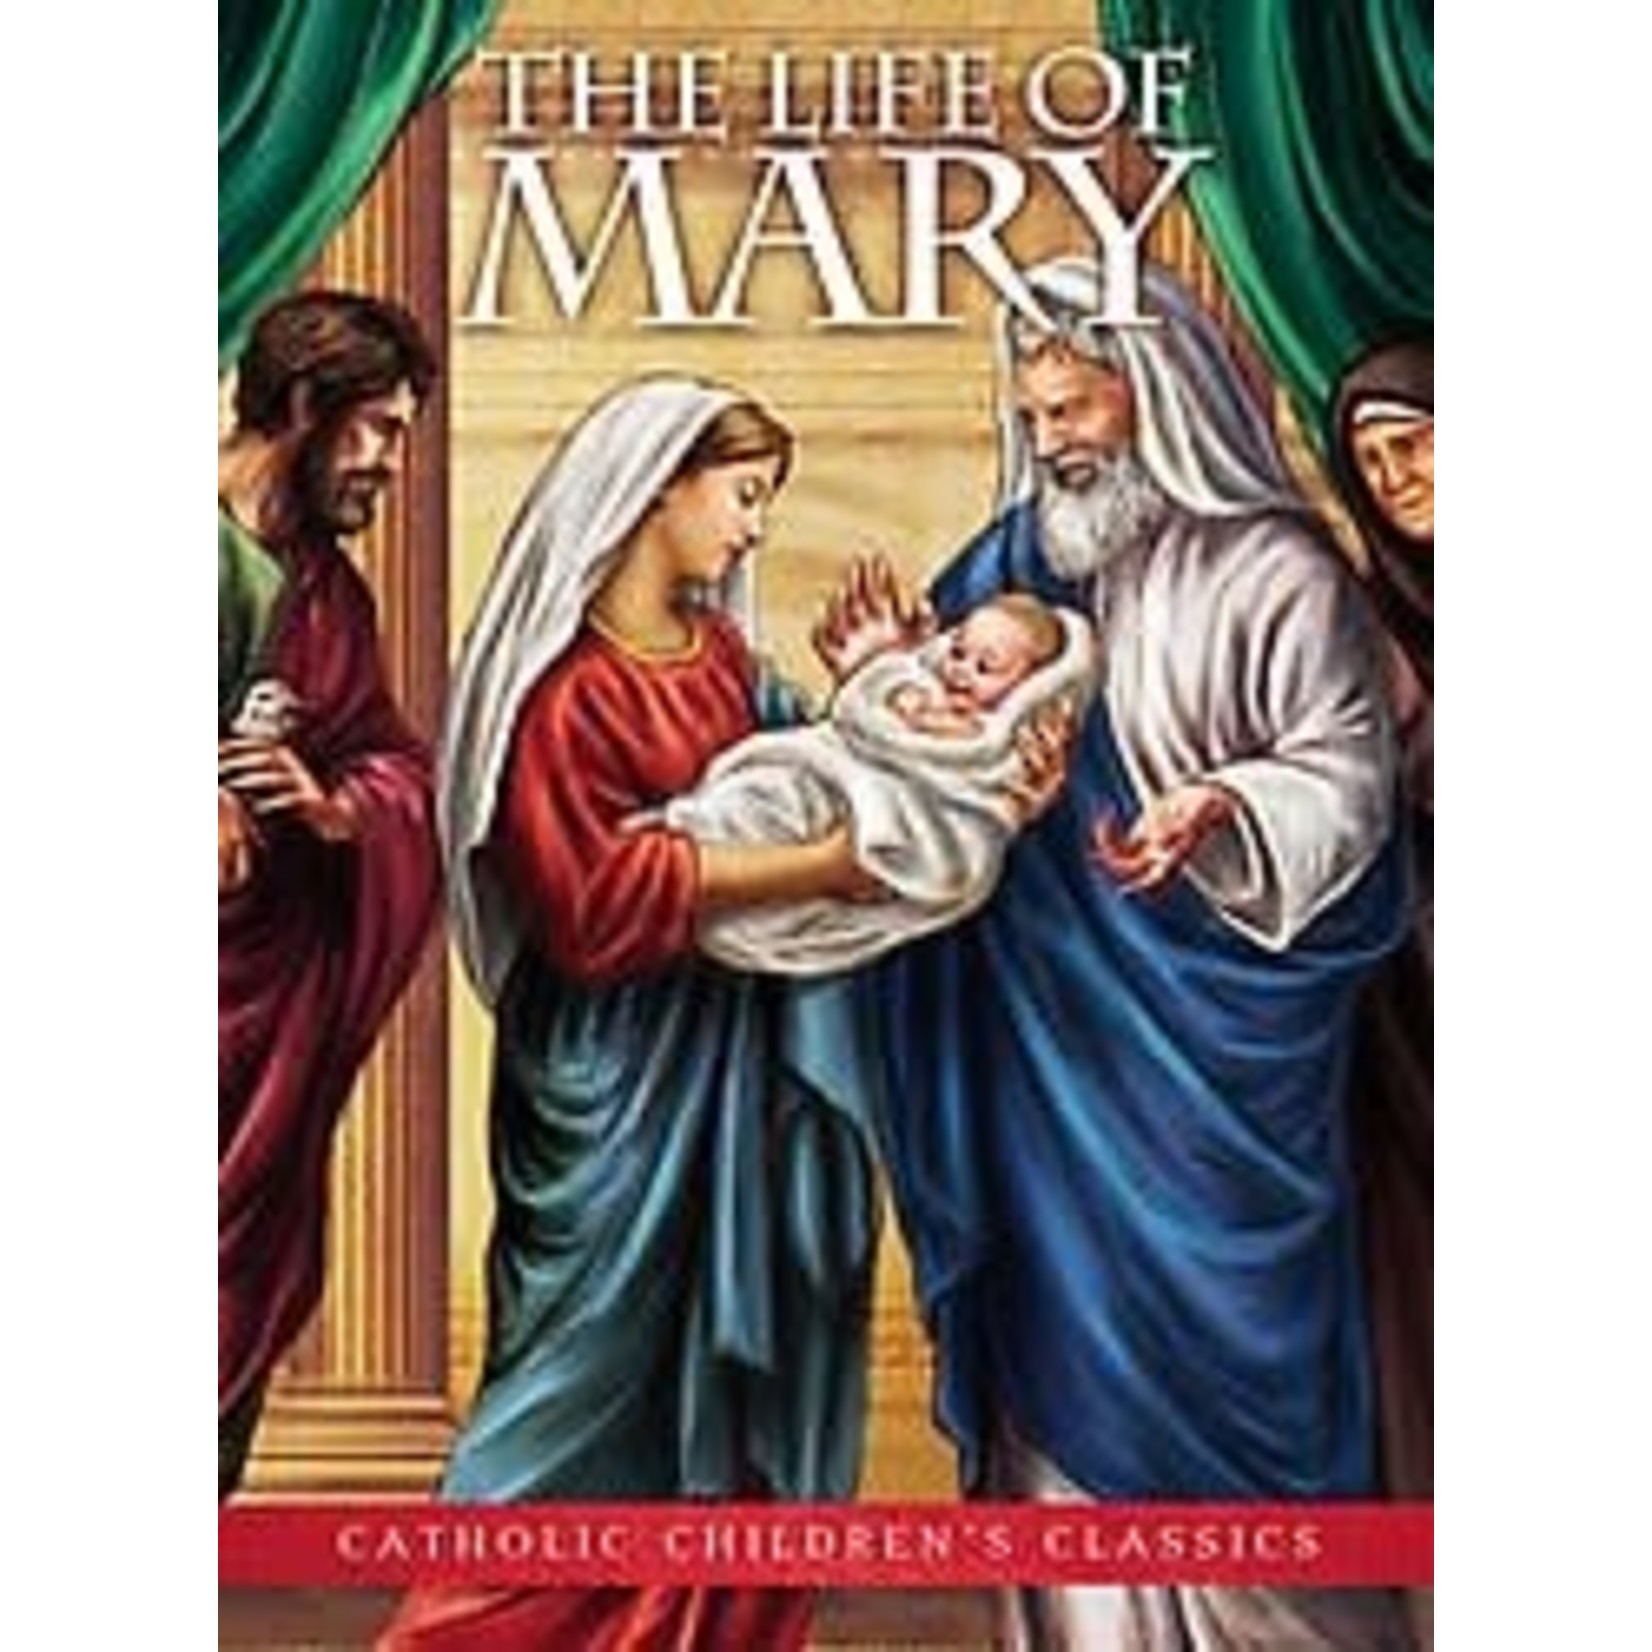 The Life of Mary Catholic Children's Classic